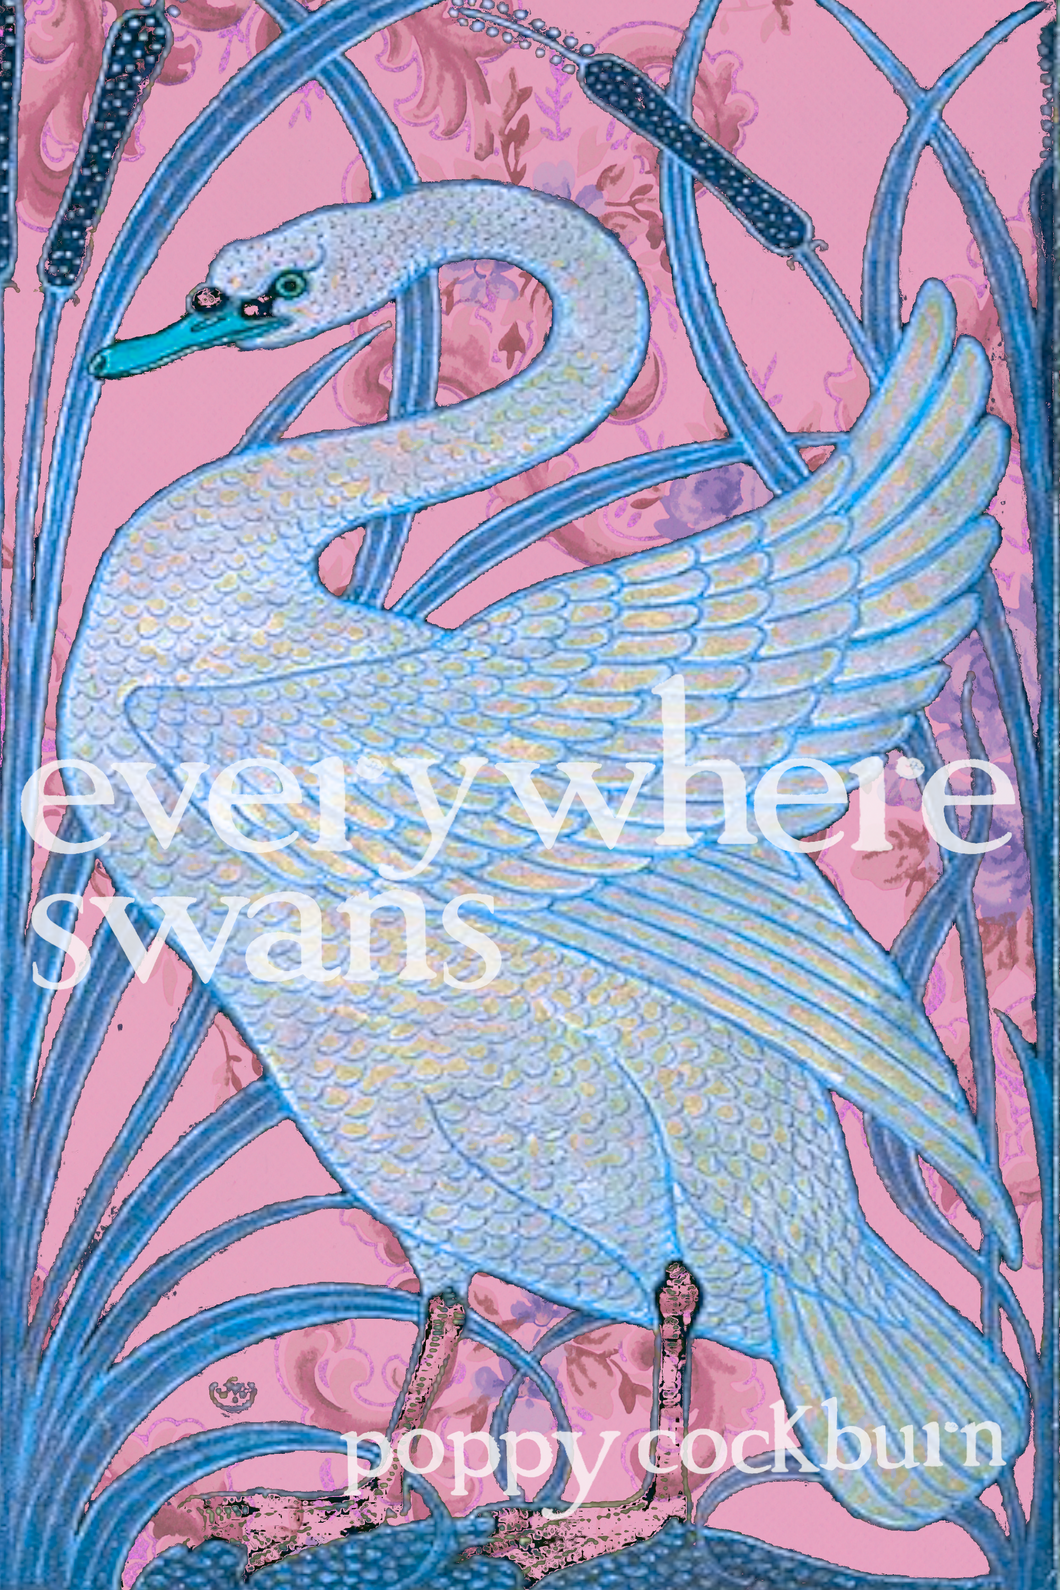 everywhere swans, by Poppy Cockburn-Print Books-Bottlecap Press